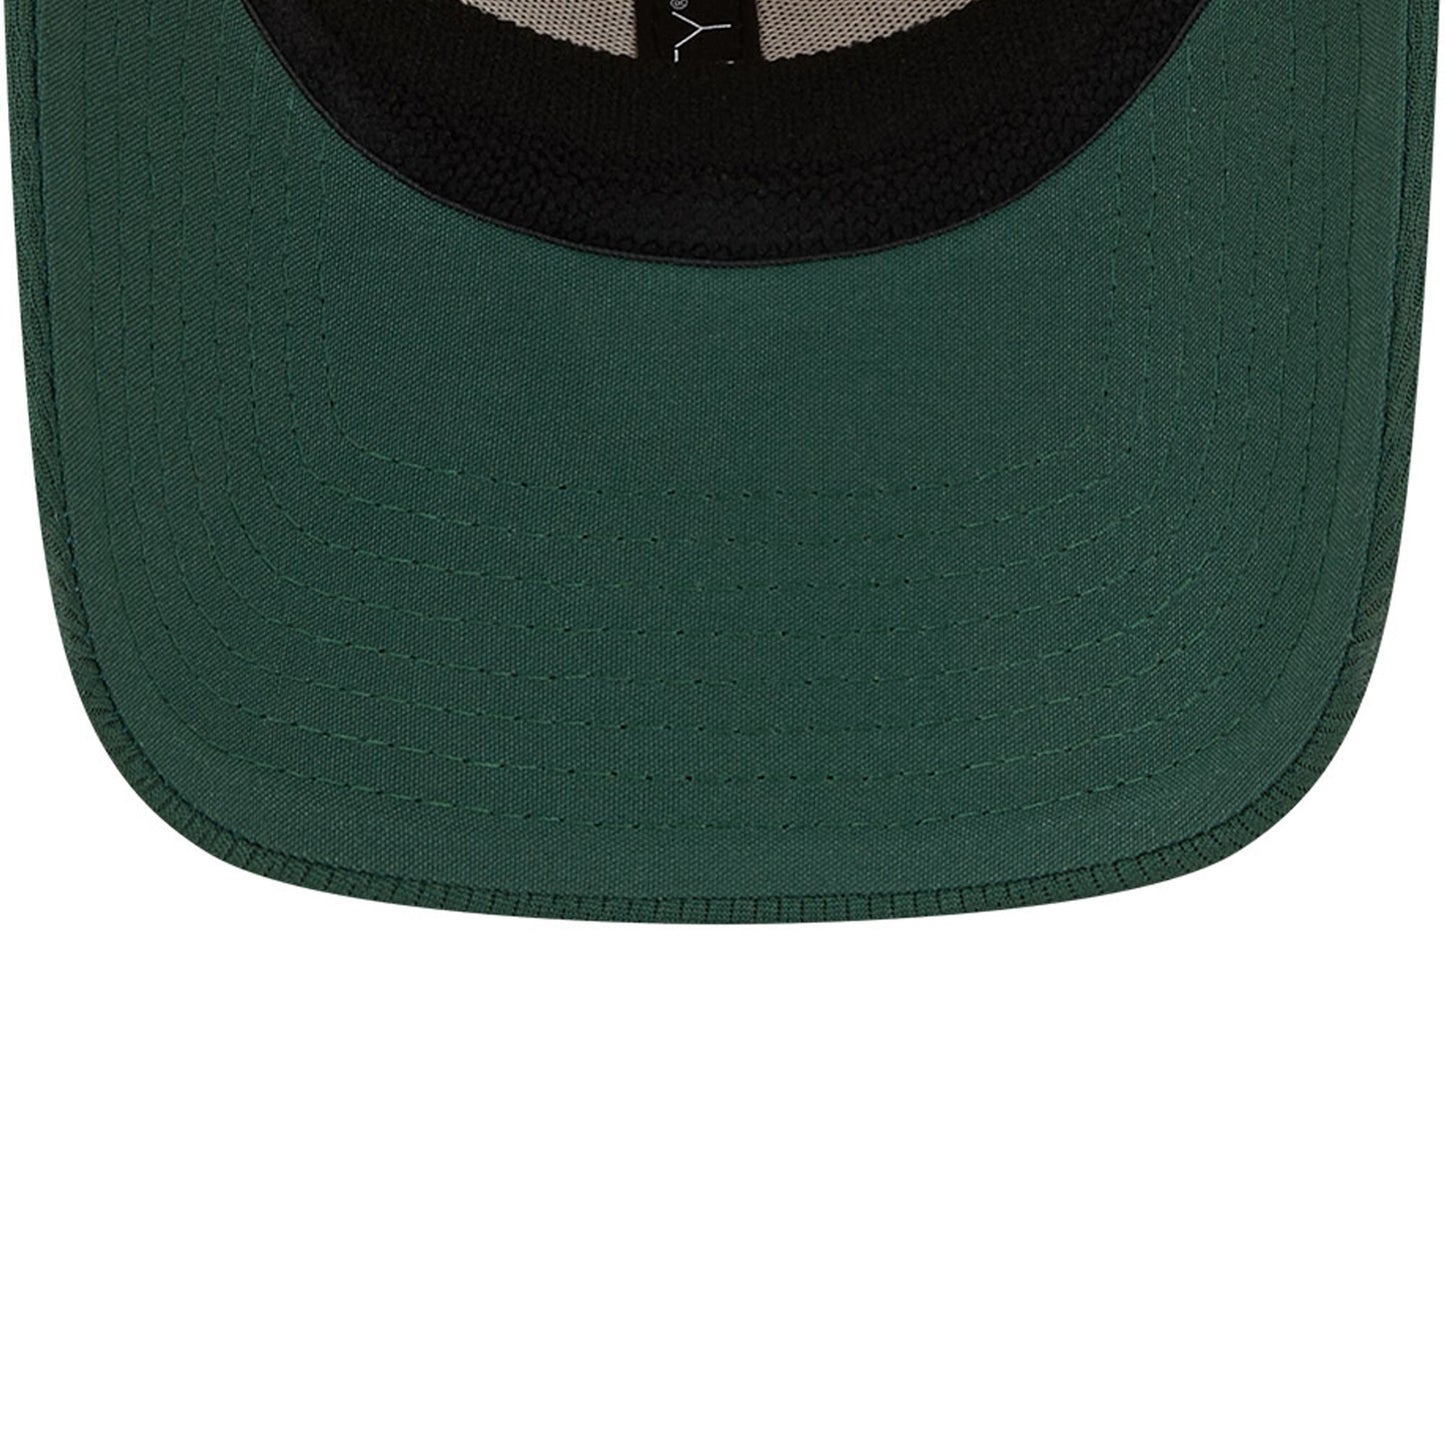 Men's Green Bay Packers Primary Logo New Era Yellow/Green 2023 Sideline 39THIRTY Flex Hat